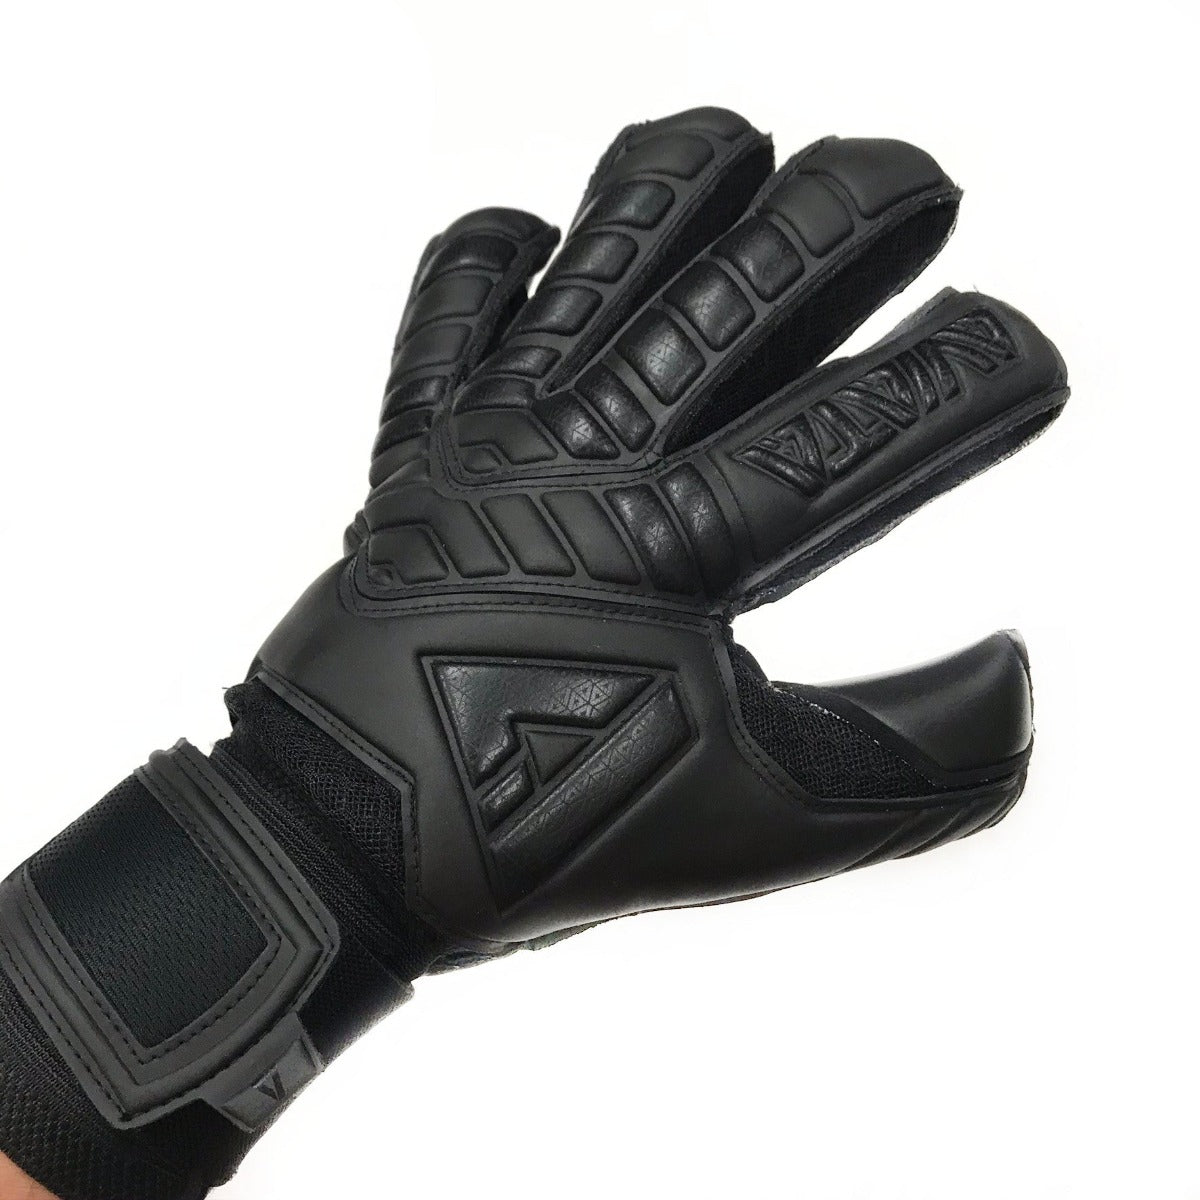 Aviata Youth Halcyon Turf Blackout Goalkeeper Gloves - Black (Single - Outer)